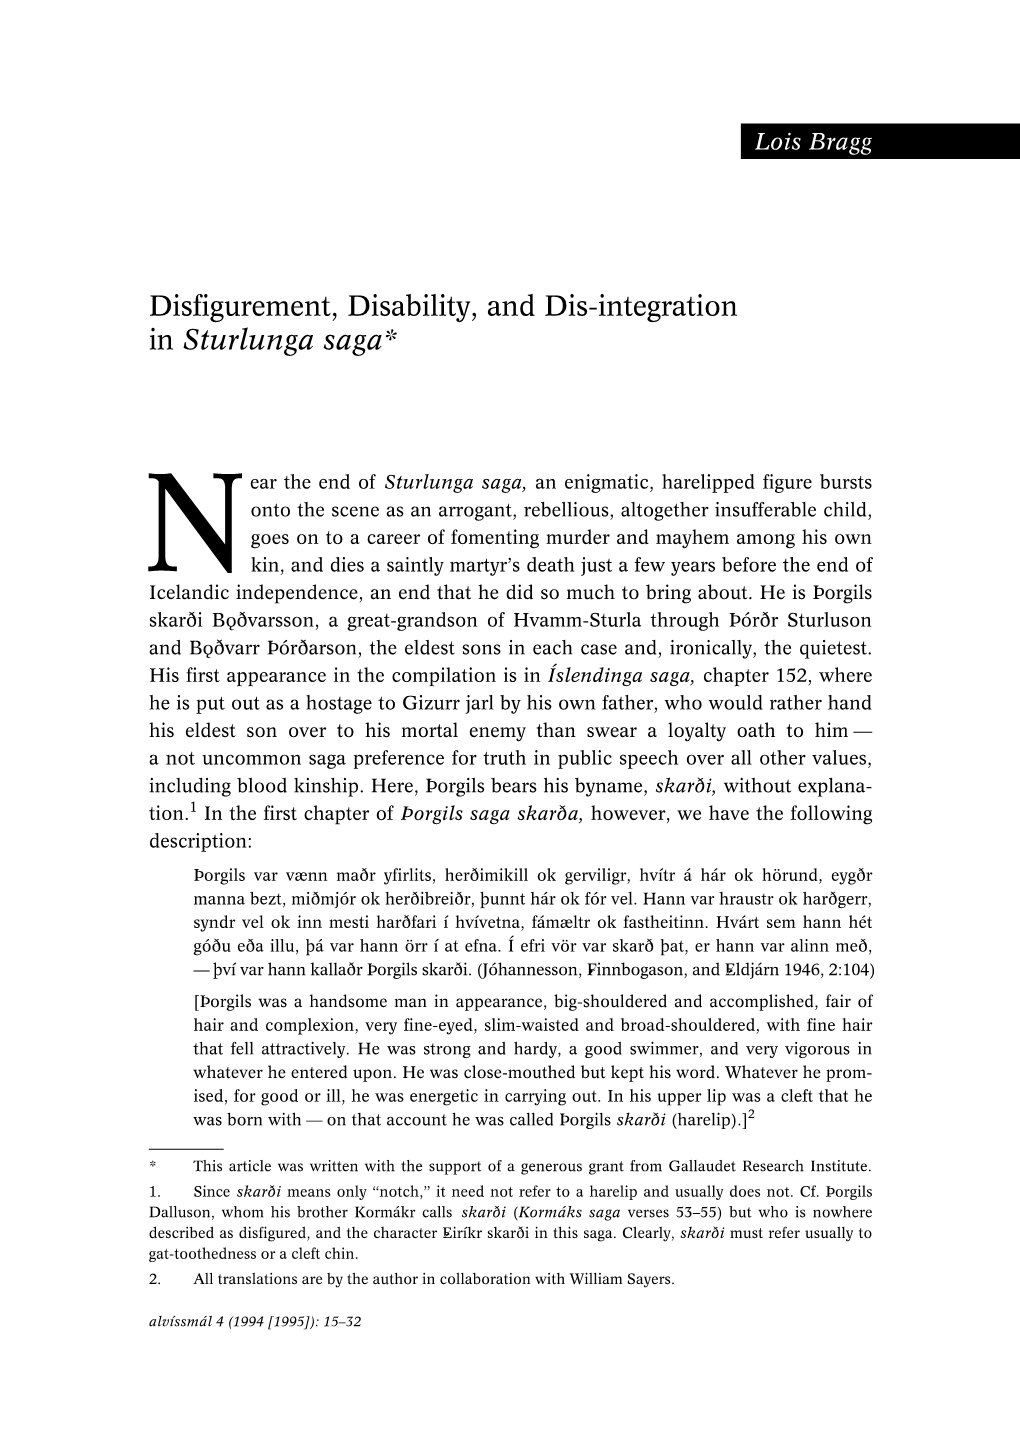 Disfigurement, Disability, and Dis-Integration in Sturlunga Saga*